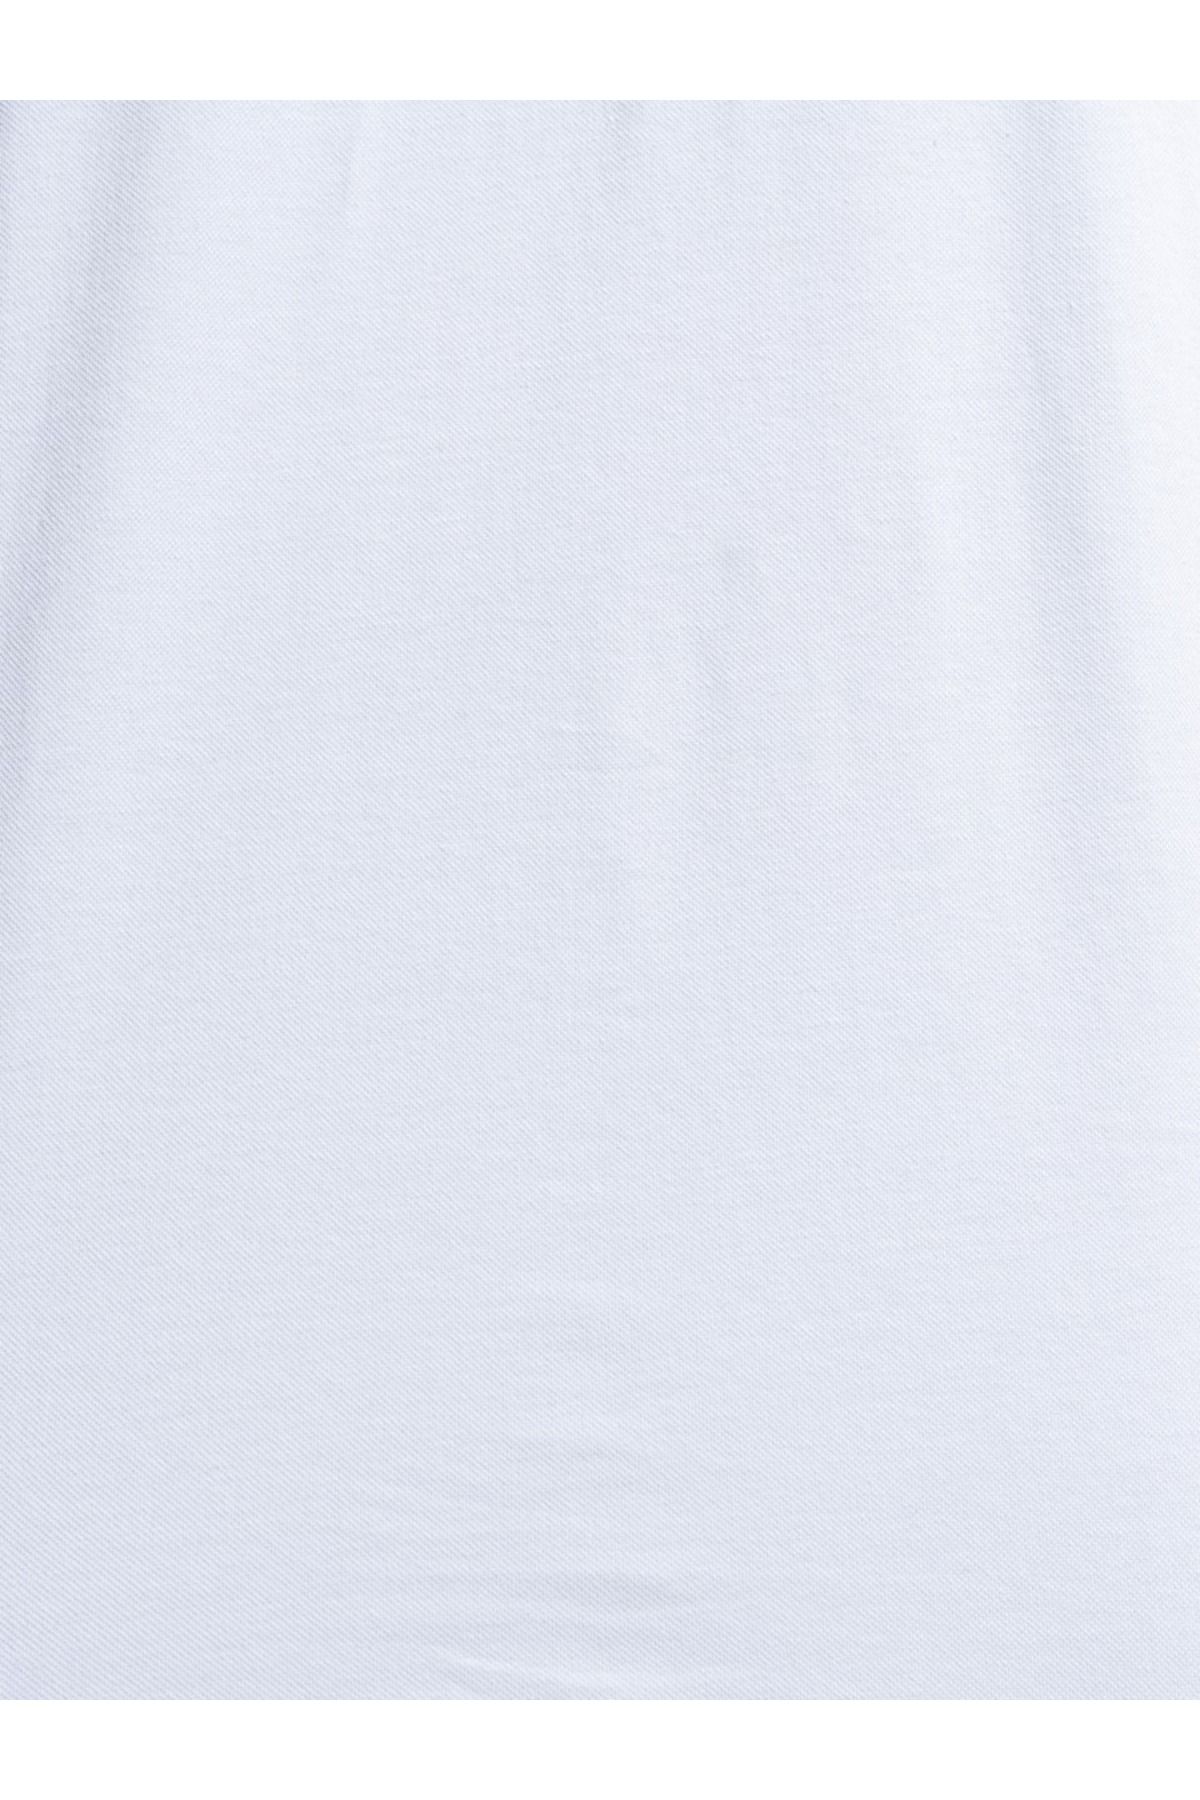 Loft تی شرت مردان LF2035129 سفید